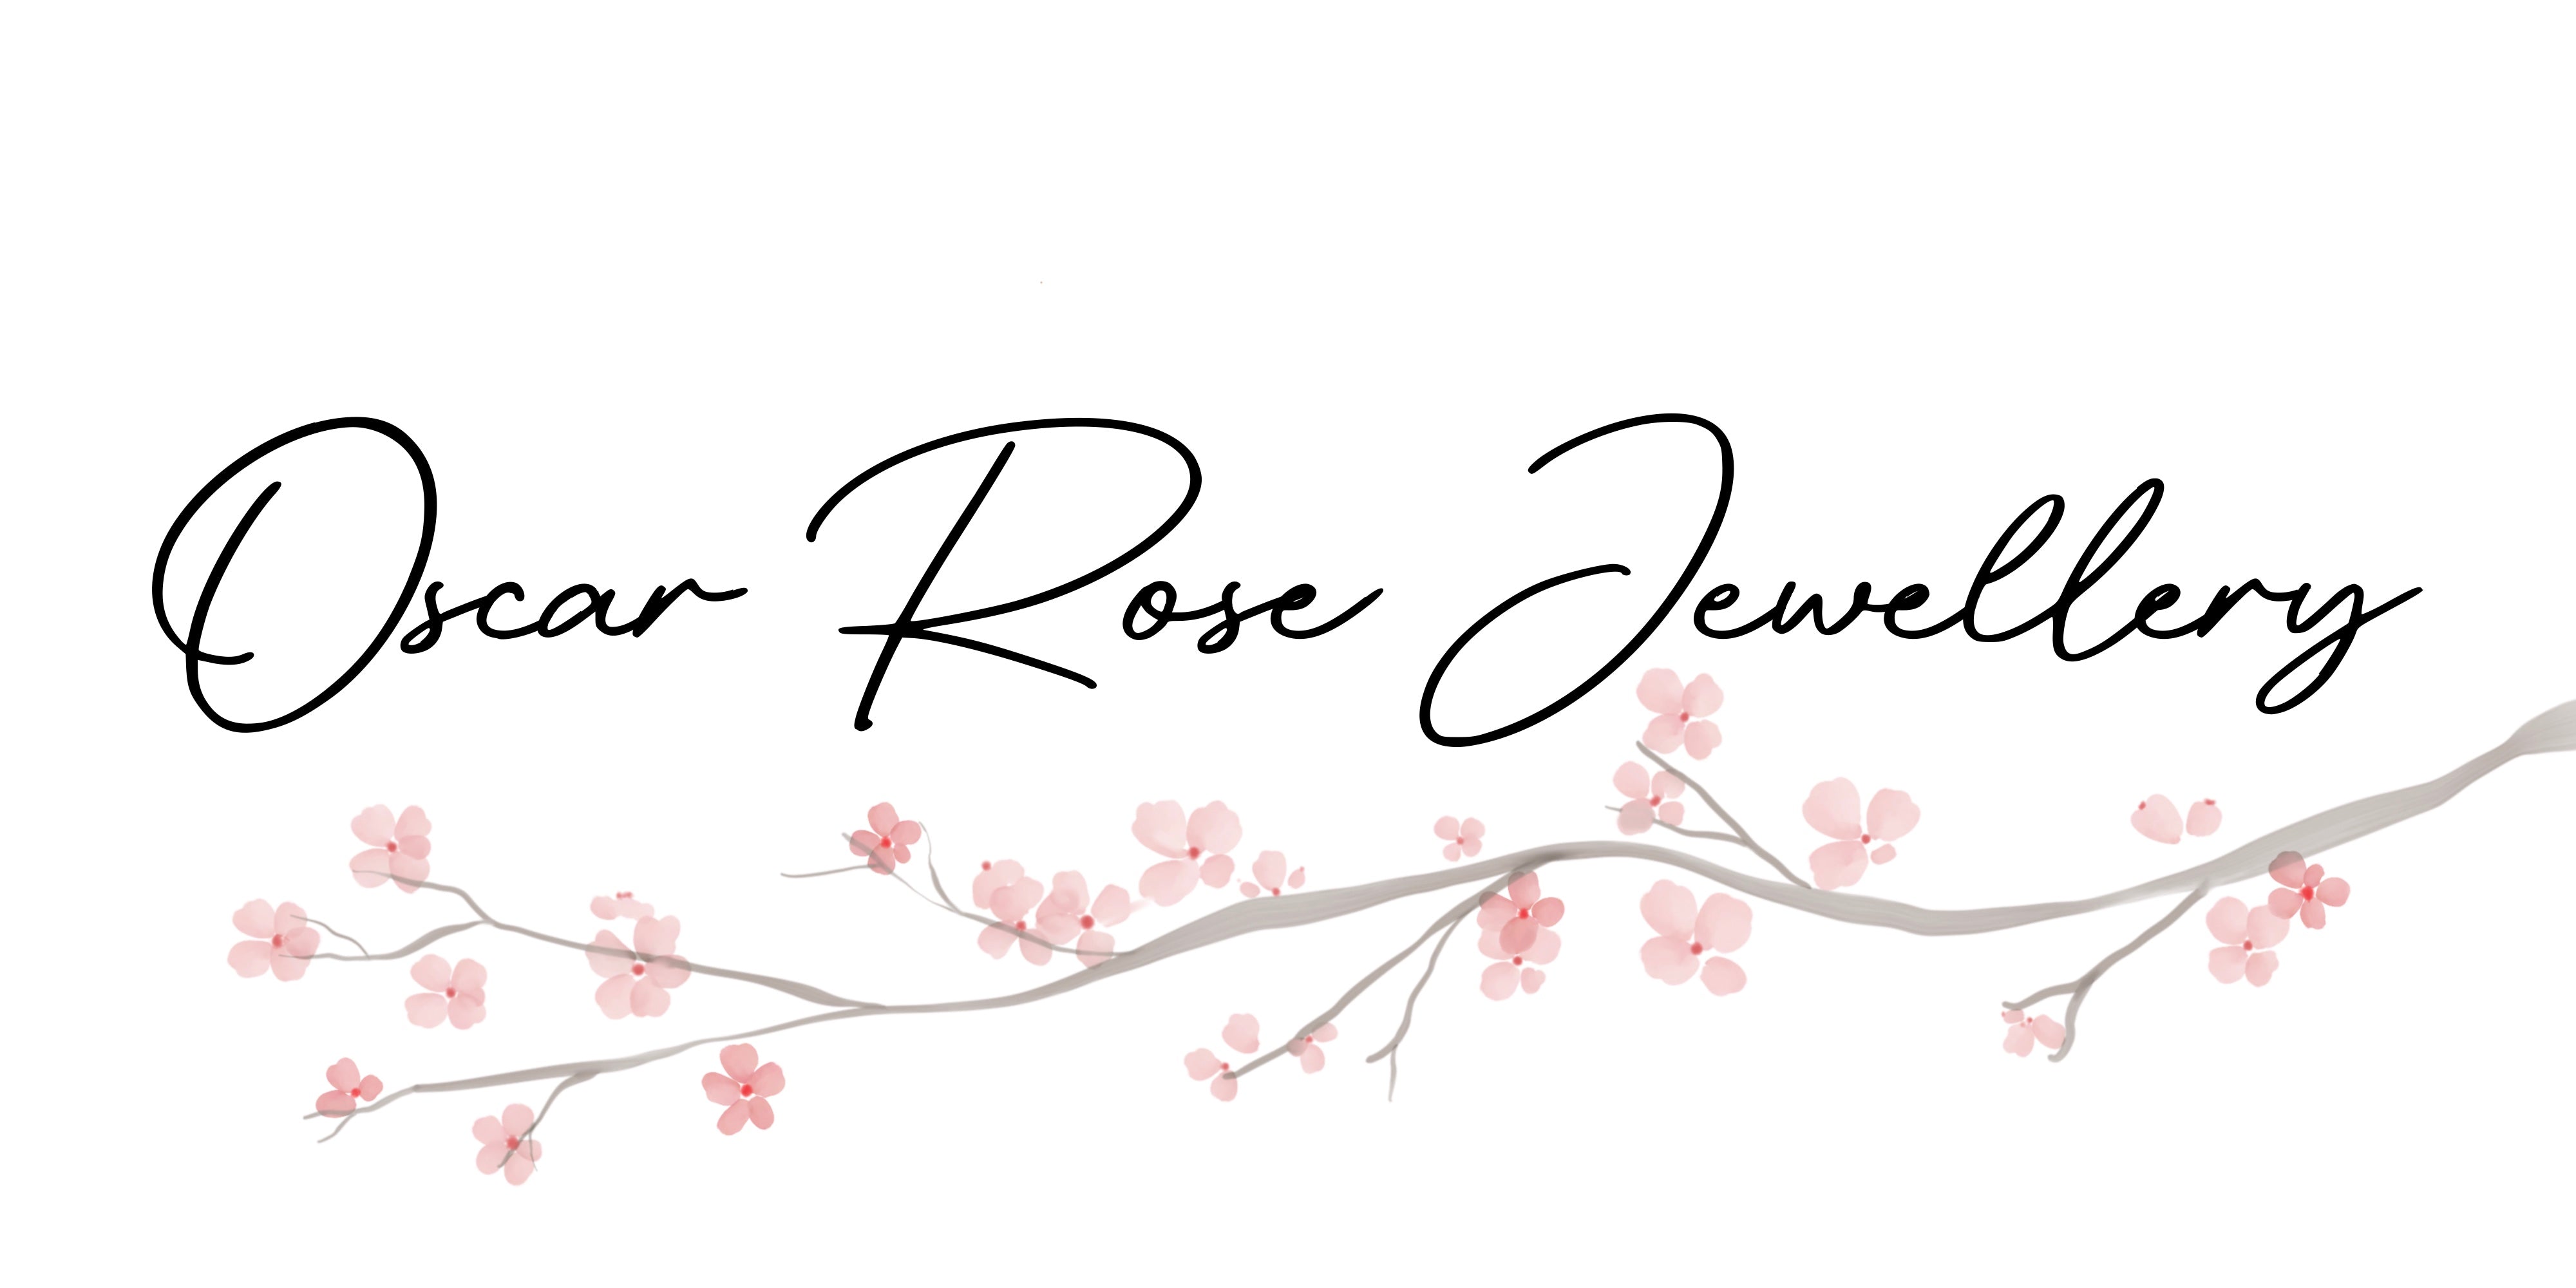 oscar-rose-jewellery